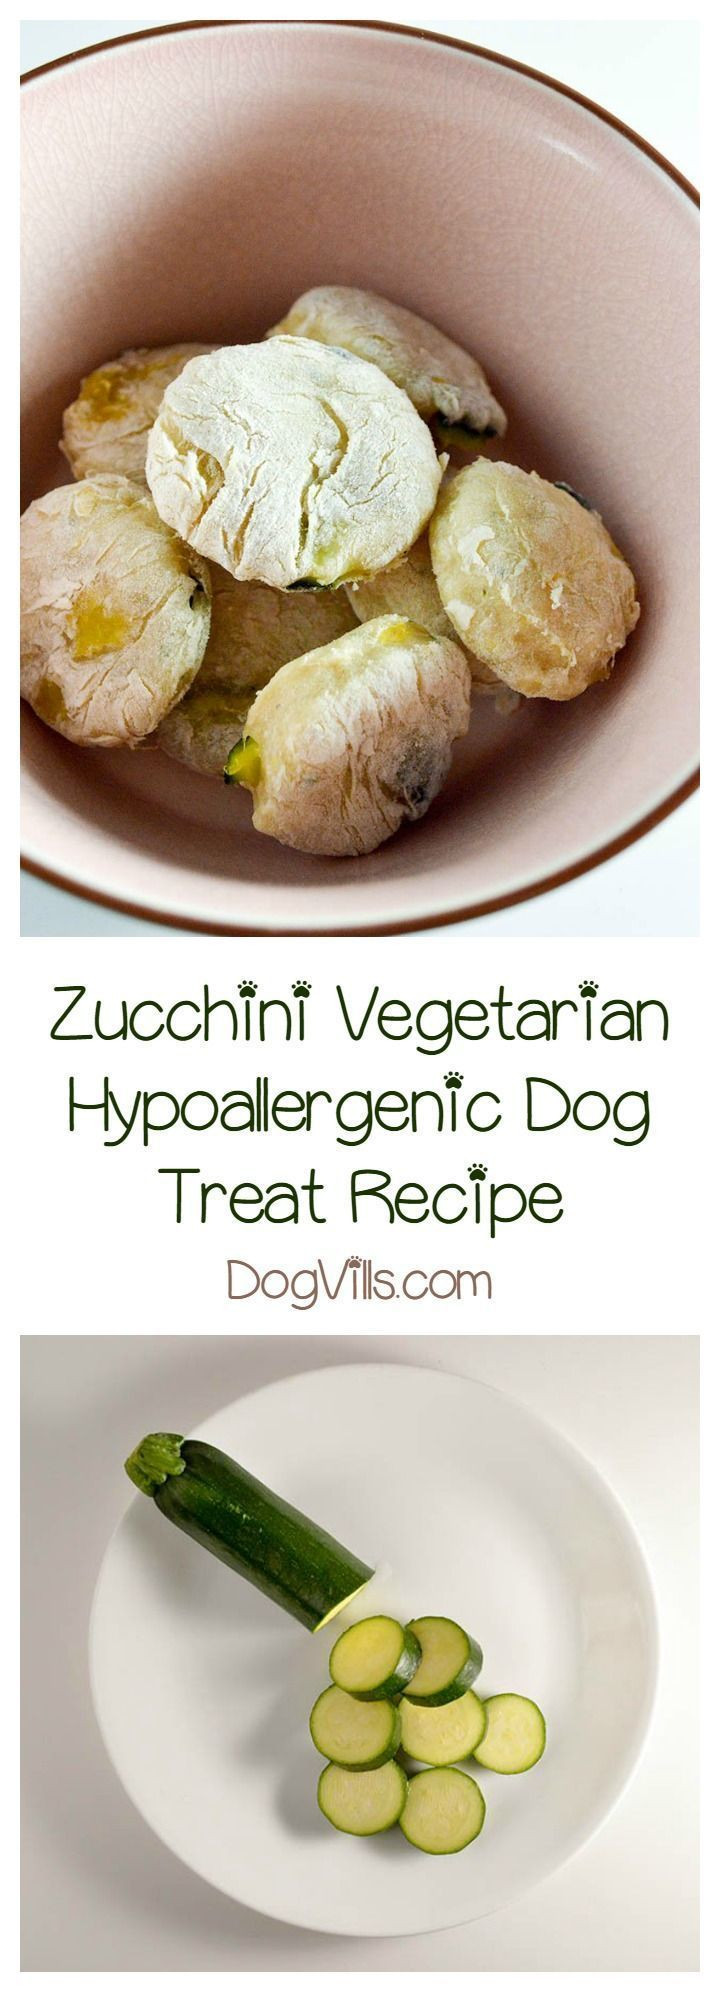 Vegetarian Dog Treat Recipes
 25 best ideas about Hypoallergenic dog treats on